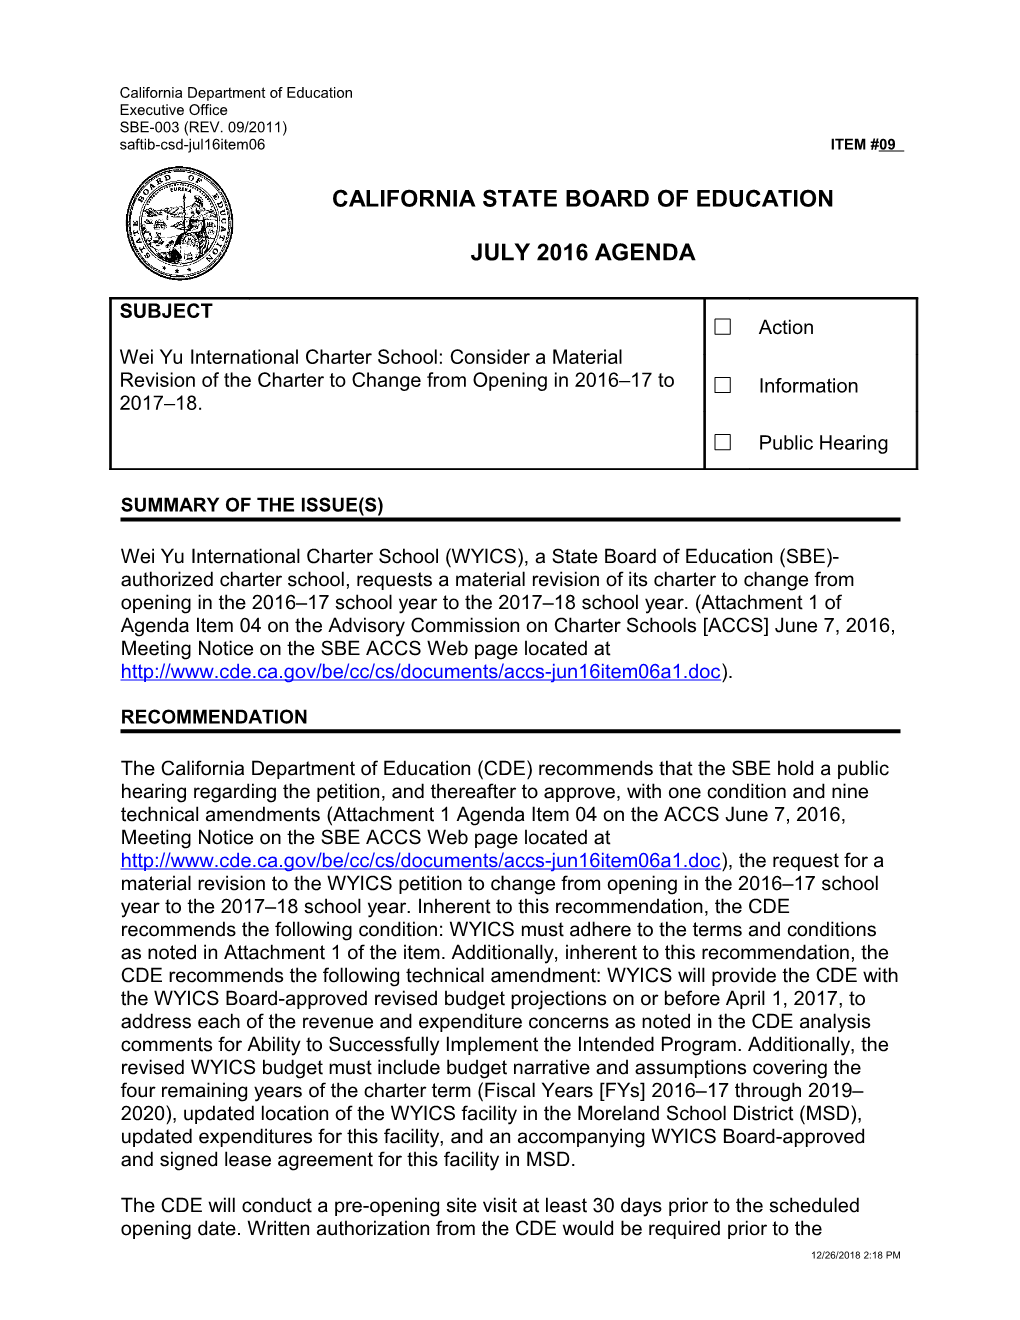 July 2016 Agenda Item 09 - Meeting Agendas (CA State Board of Education)